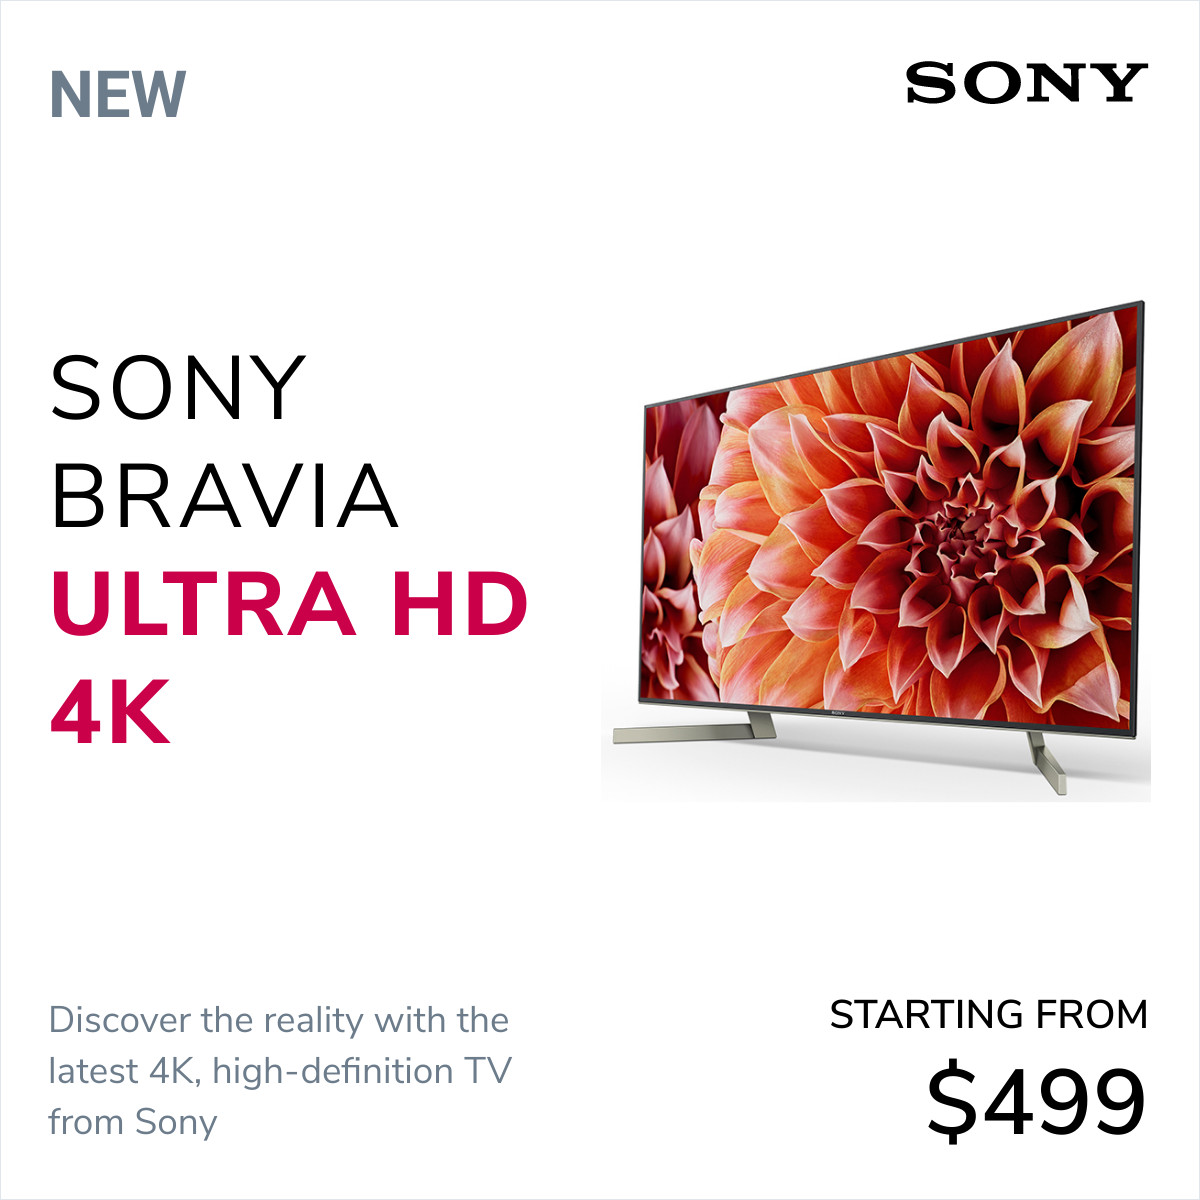 Sony Bravia Ultra HD Inline Rectangle 300x250